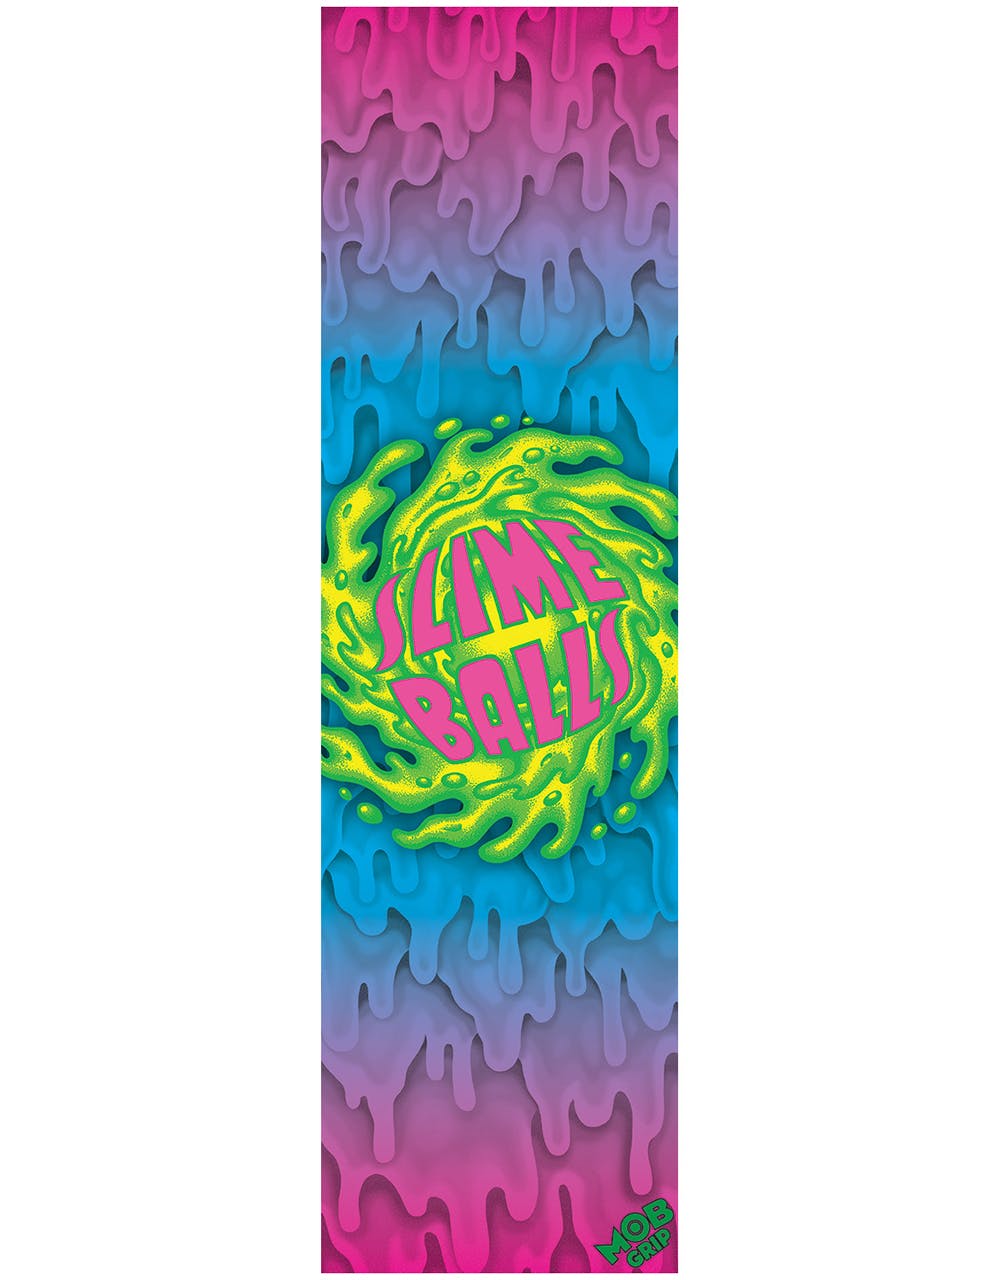 MOB x Santa Cruz Slime Balls 9" Graphic Grip Tape Sheet